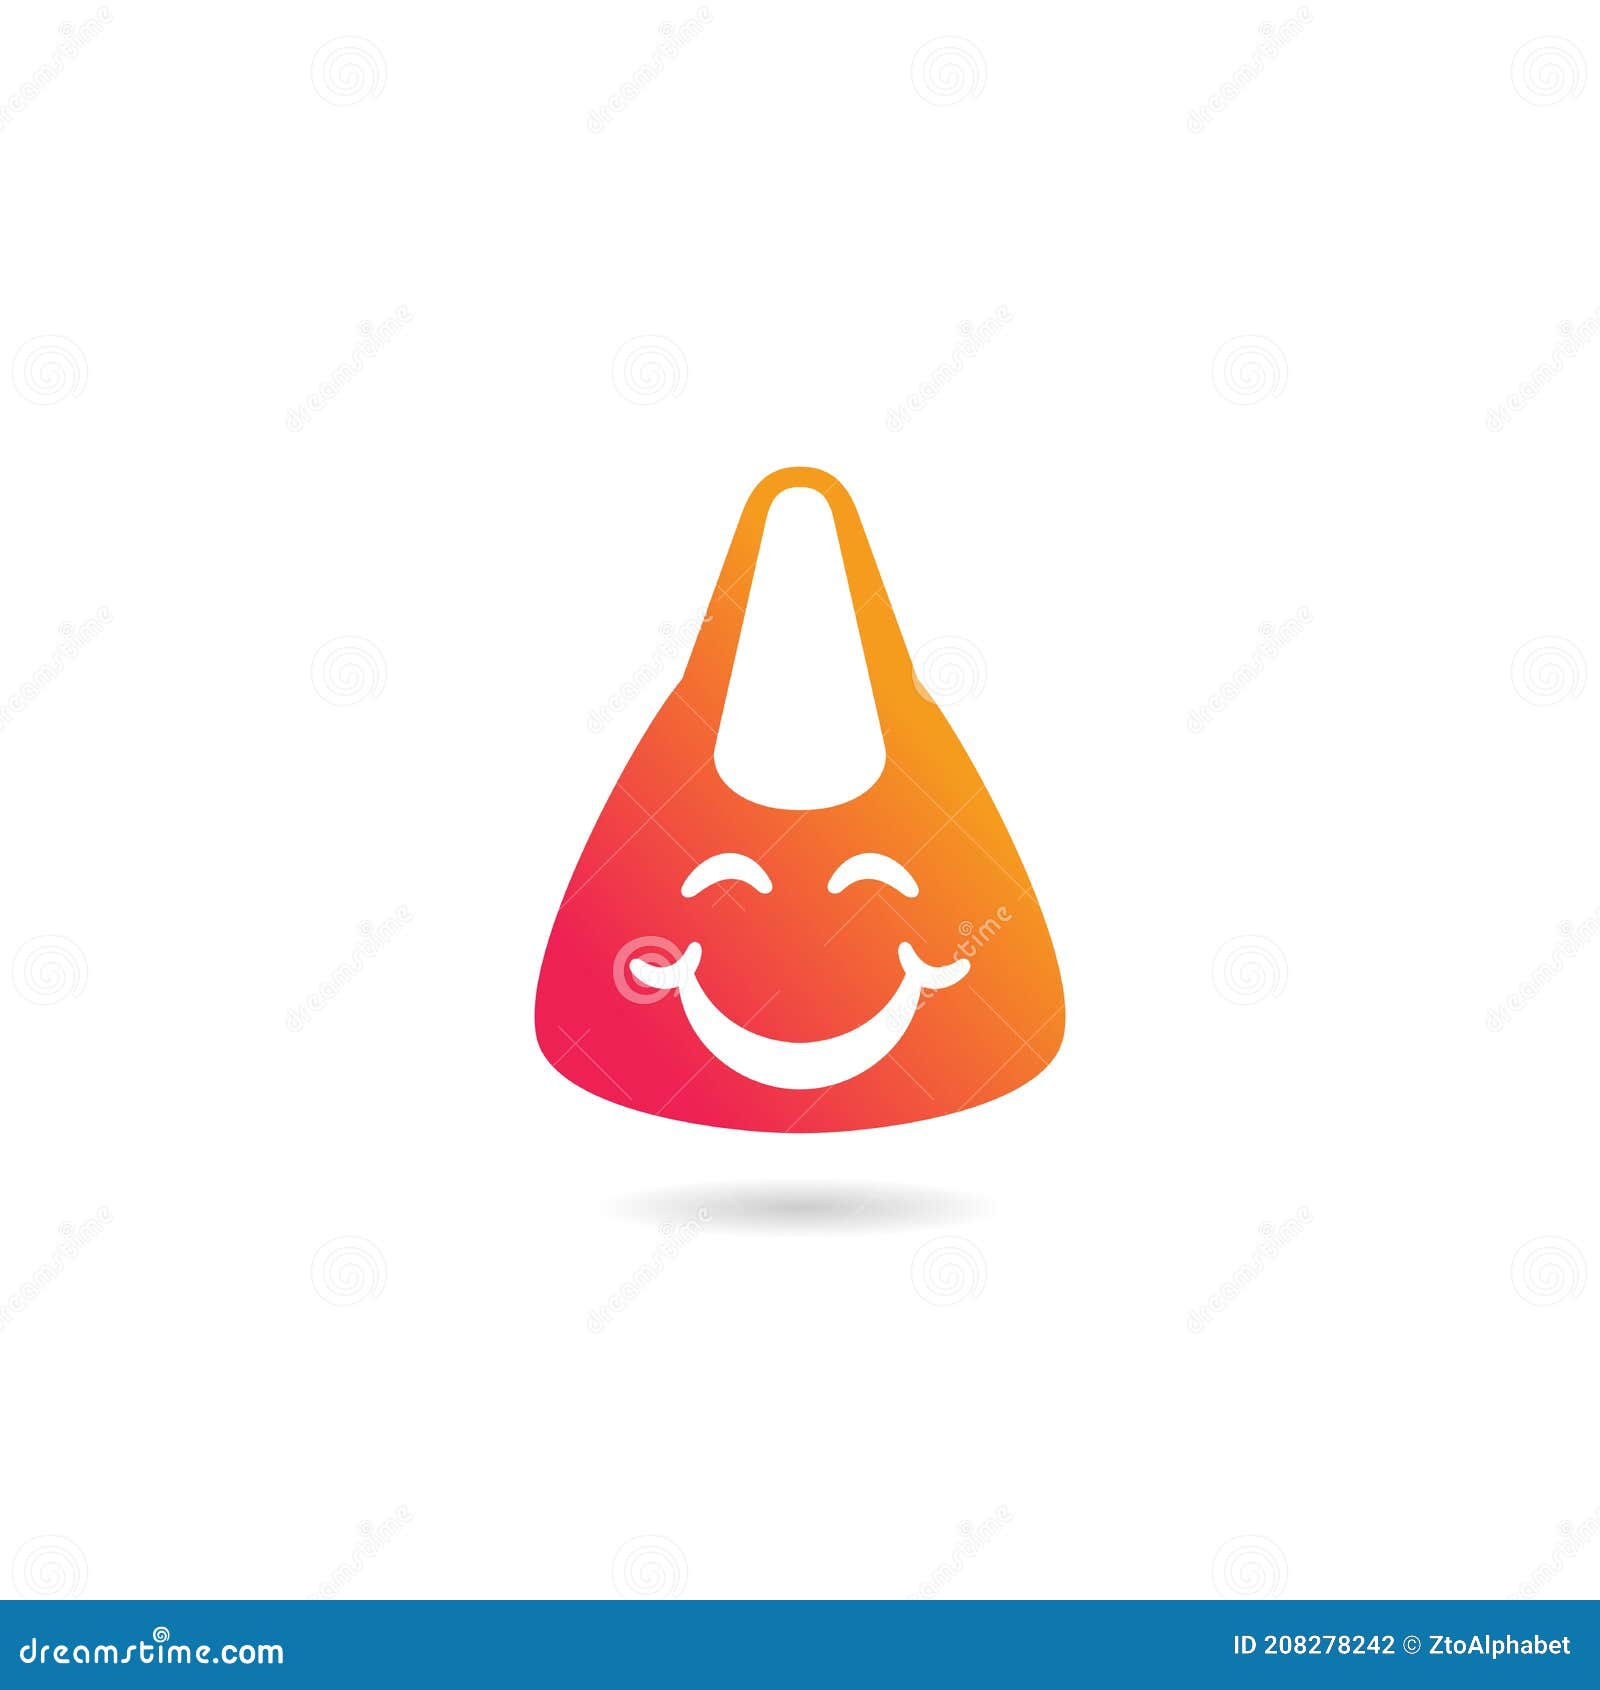 Happy shopping Bag Logo